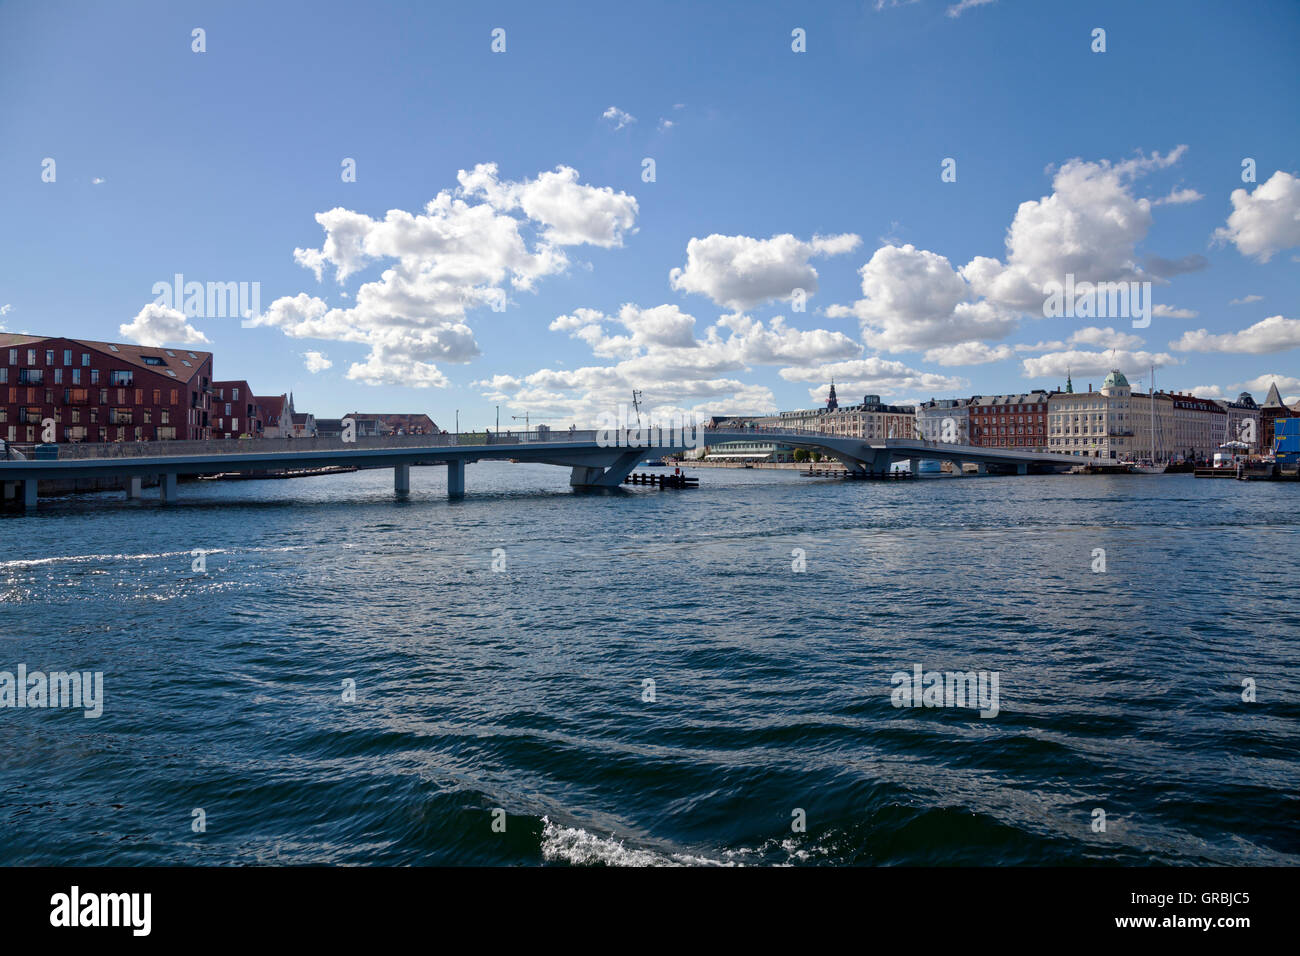 The new pedestrian and cyclist bridge, the Inner Harbour Bridge, the Kissing Bridge, connecting Nyhavn and Christianshavn. Copenhagen, Denmark. Stock Photo